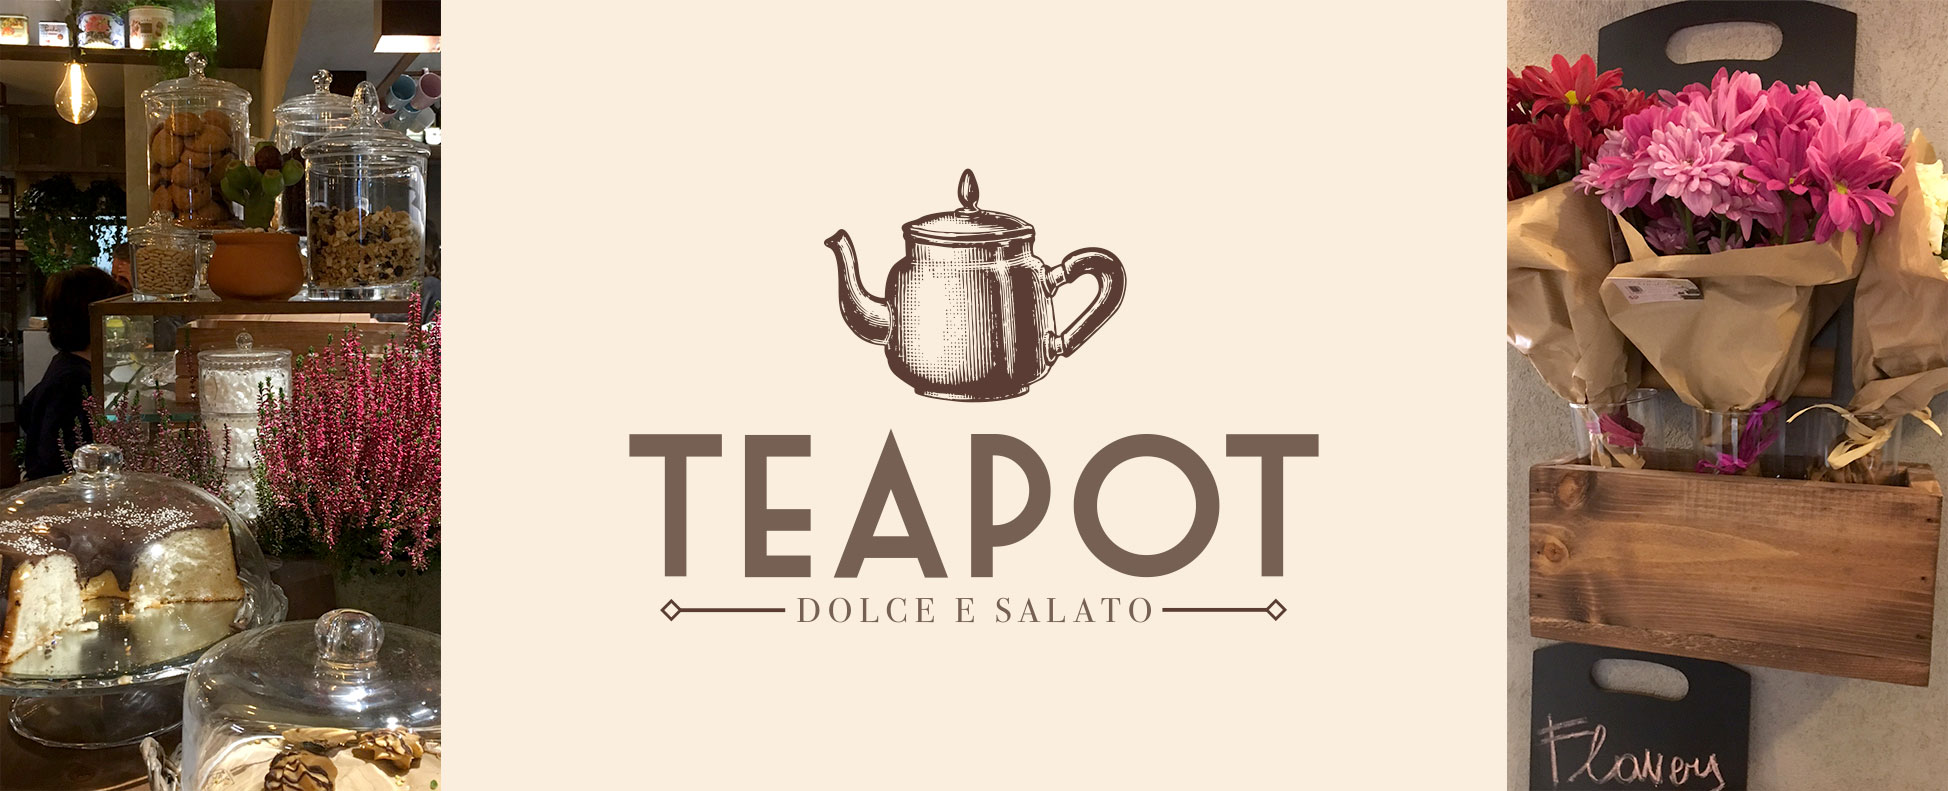 Teapot-print brand identity